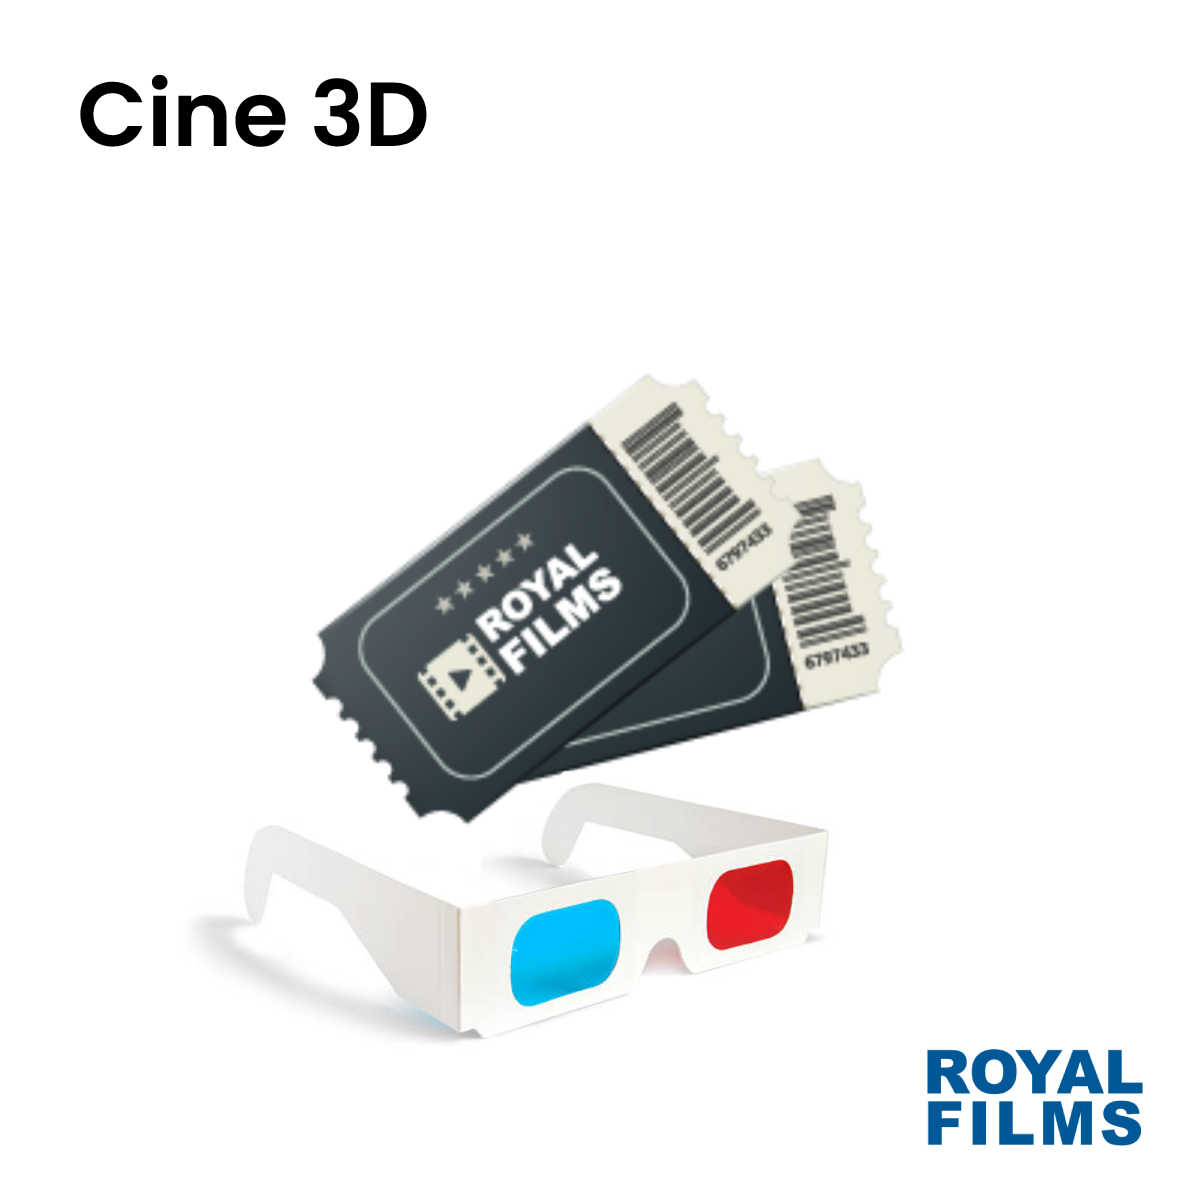 Bonos Cine 3D - Royal Films